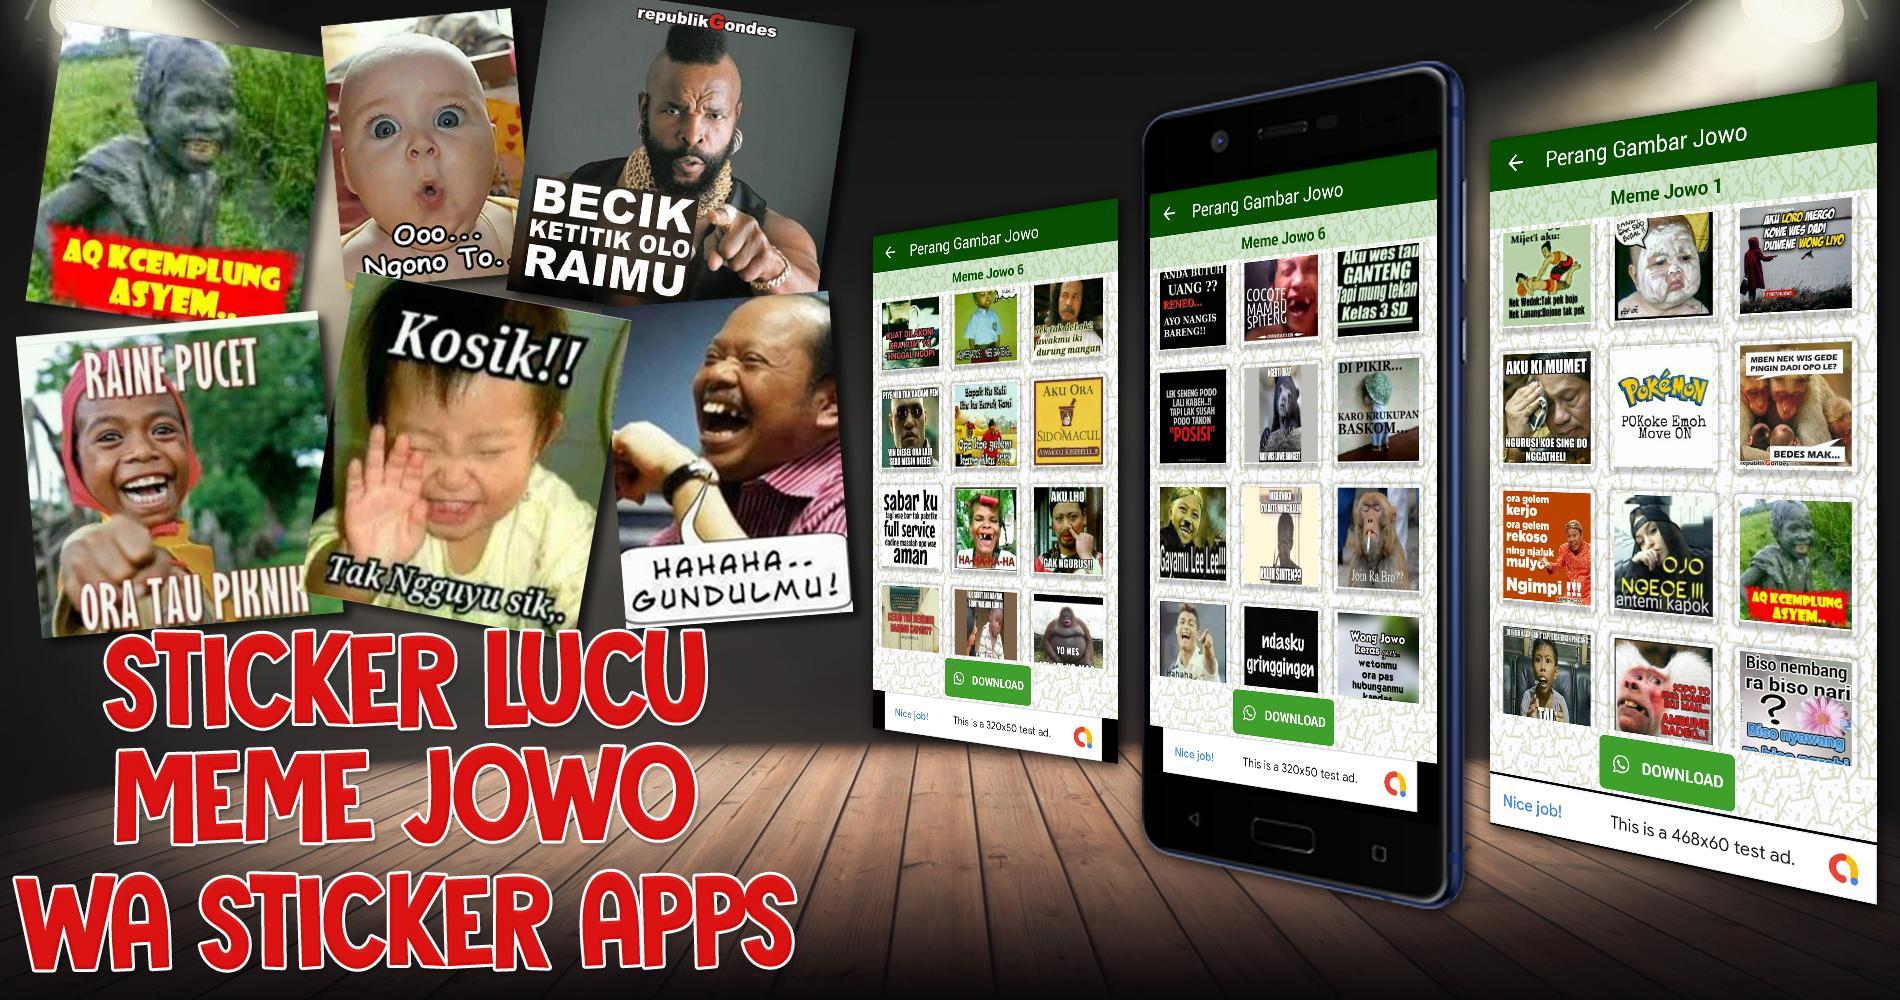 Stiker Meme Perang Gambar Jowo Lucu Wastickerapps For Android